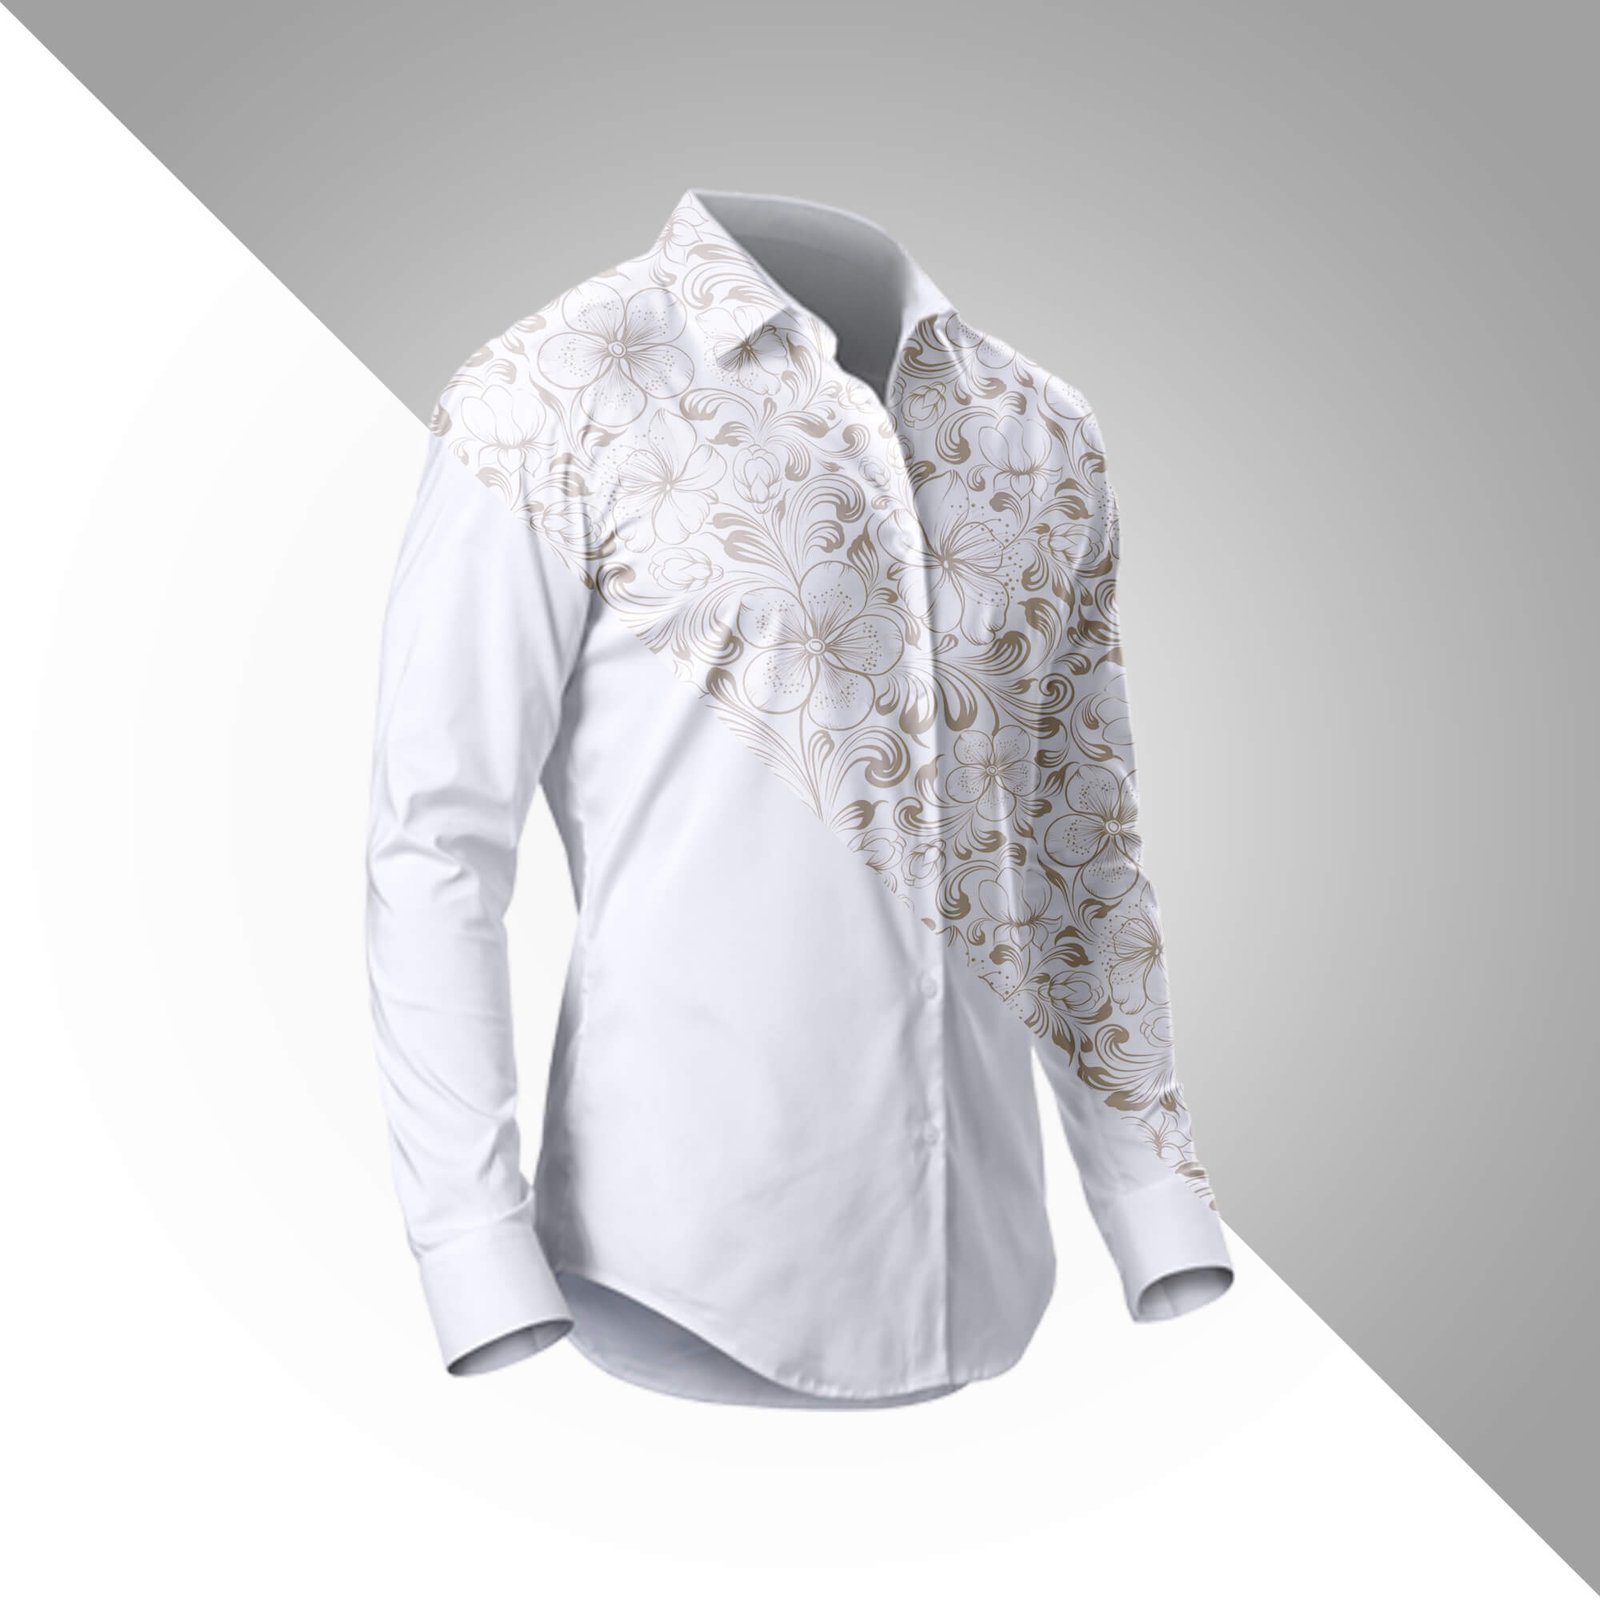 Editable Free White Shirt Mockup PSD Template